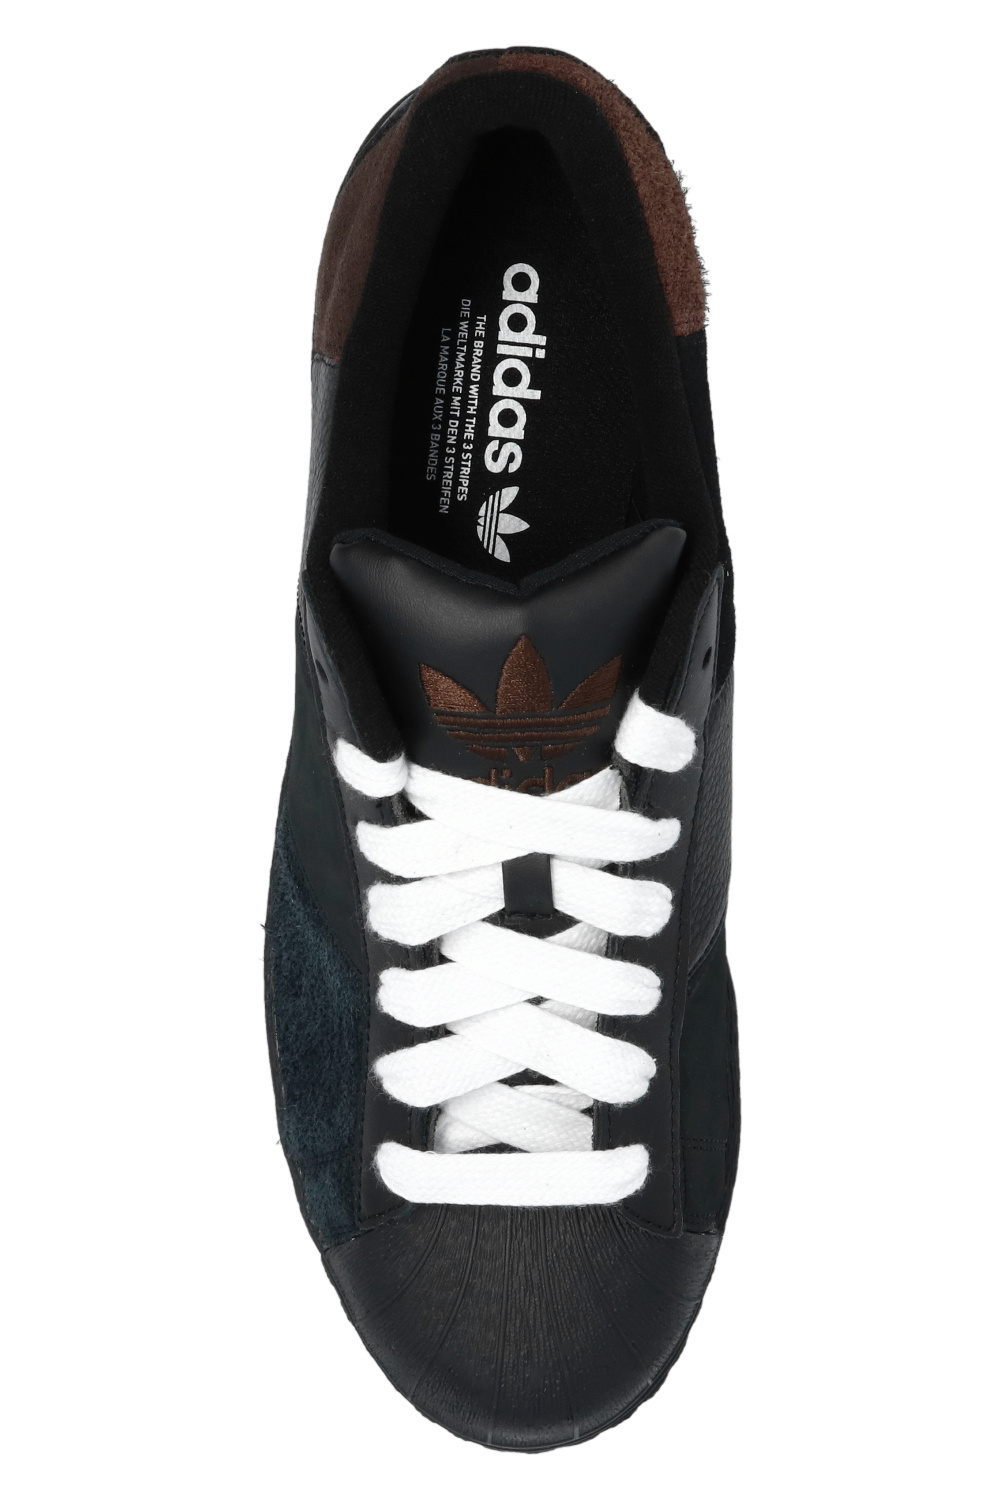 Jalen Ramsey Adidas Superstar shoes